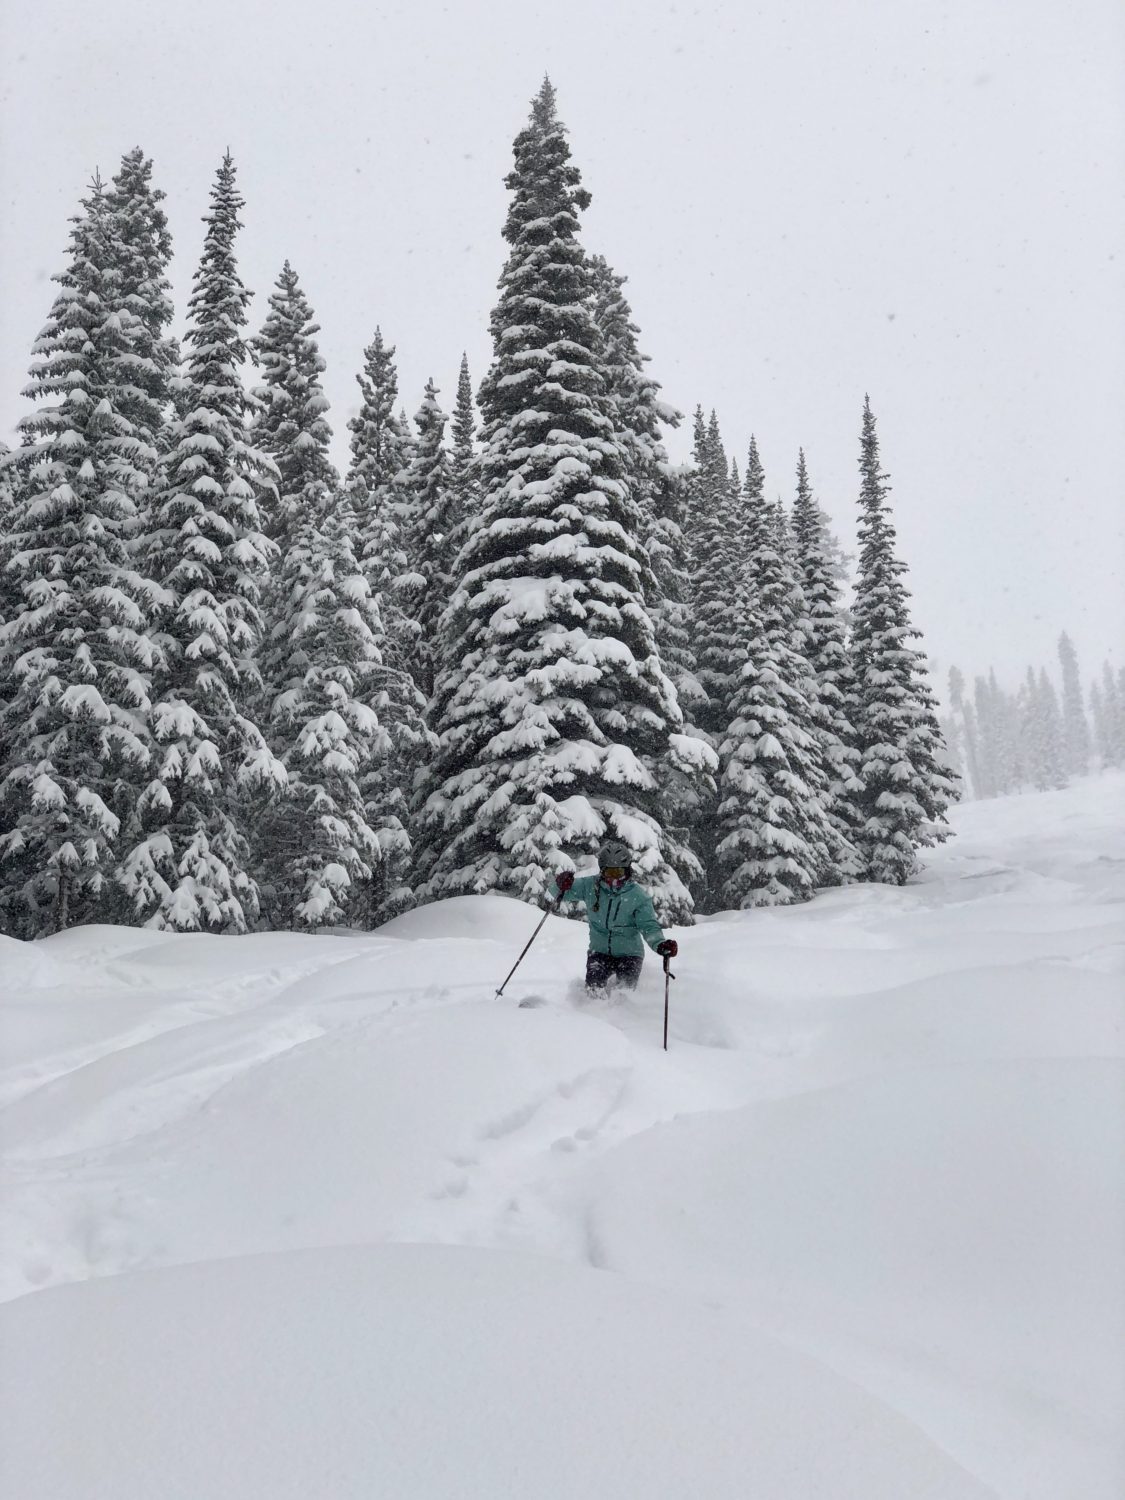 Winter Park, CO Conditions Report: Powder Moguls! - SnowBrains